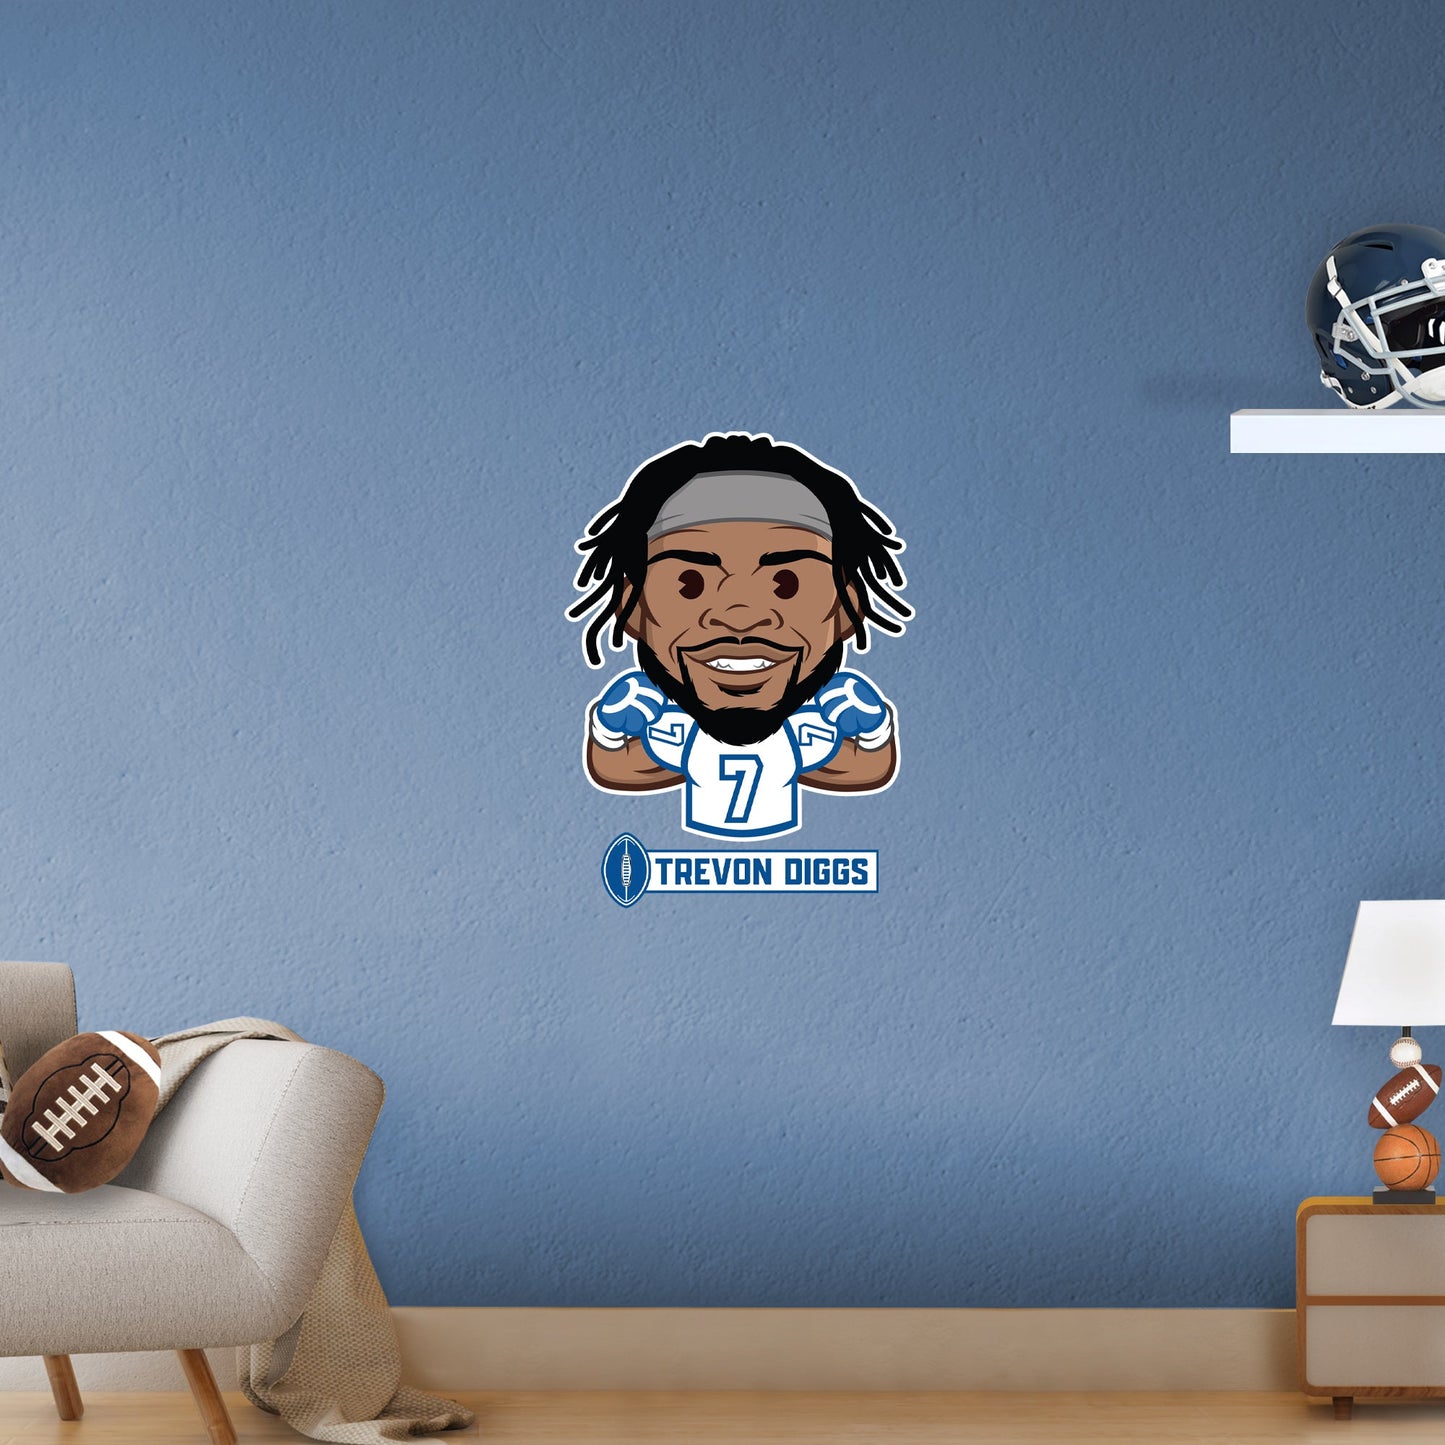 Dallas Cowboys: Trevon Diggs Emoji - Officially Licensed NFLPA Removable Adhesive Decal